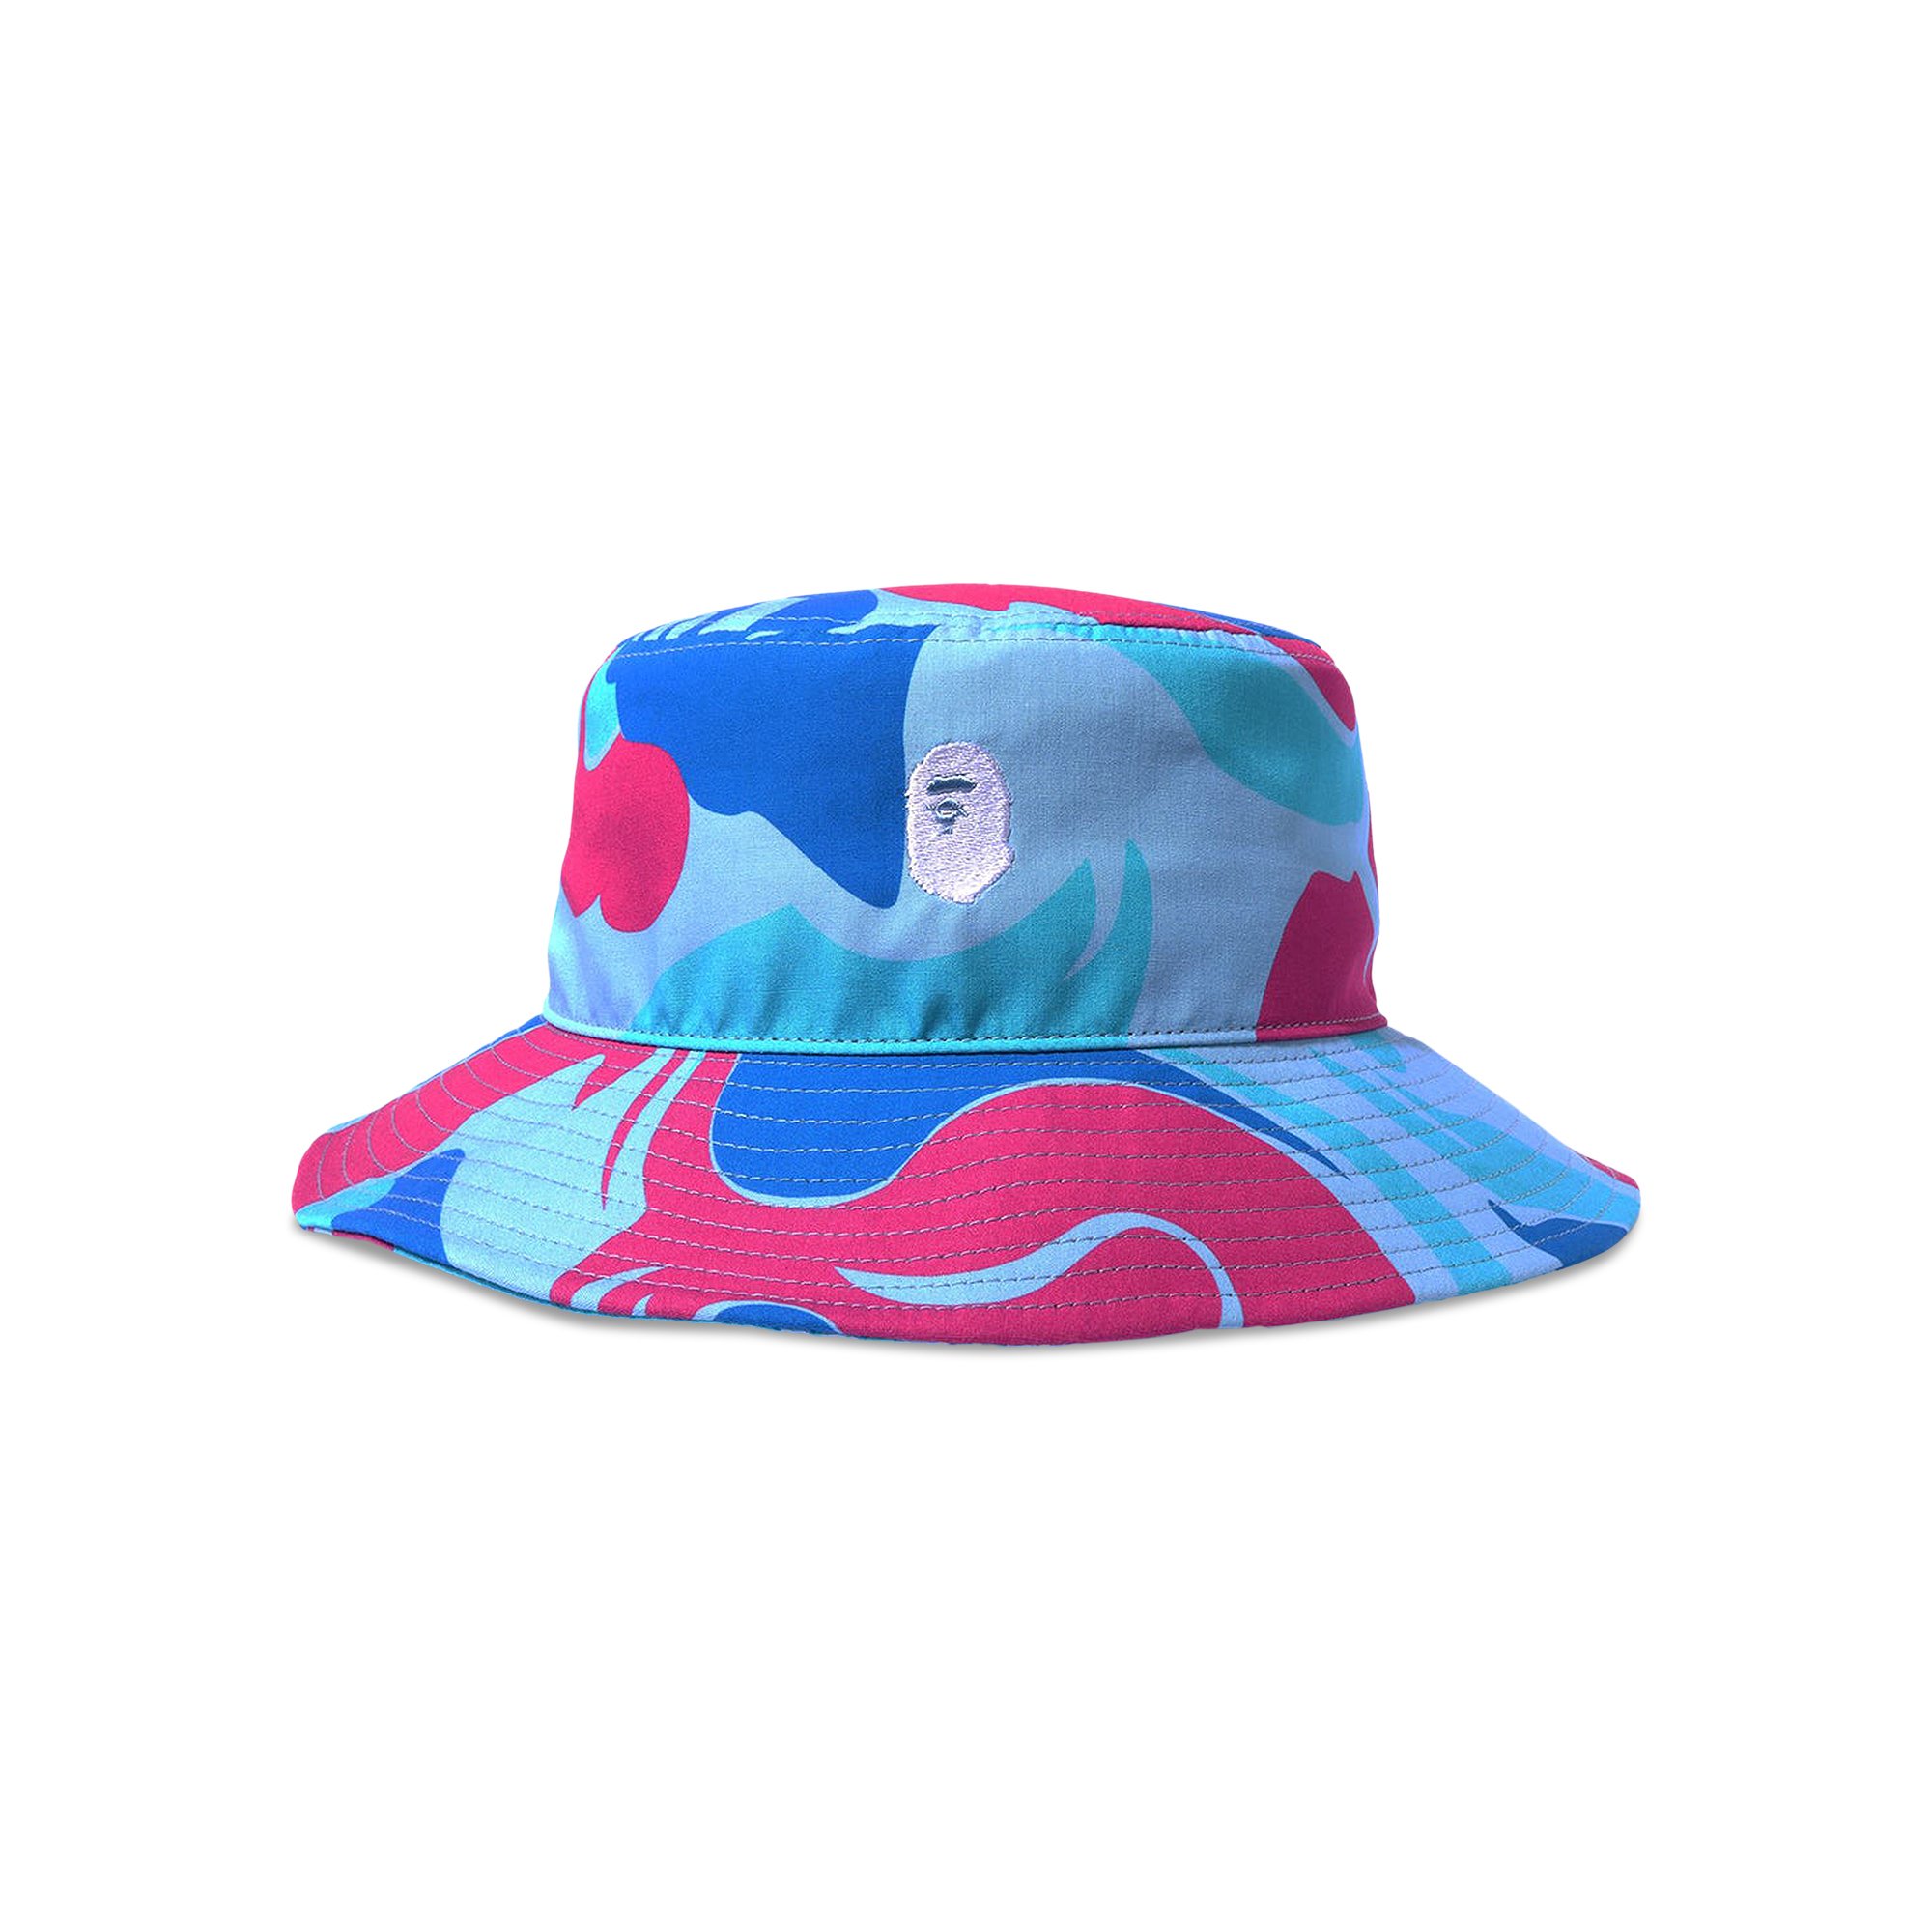 Buy BAPE Marble Camo Bucket Hat 'Blue' - 1I30 181 007 BLUE | GOAT